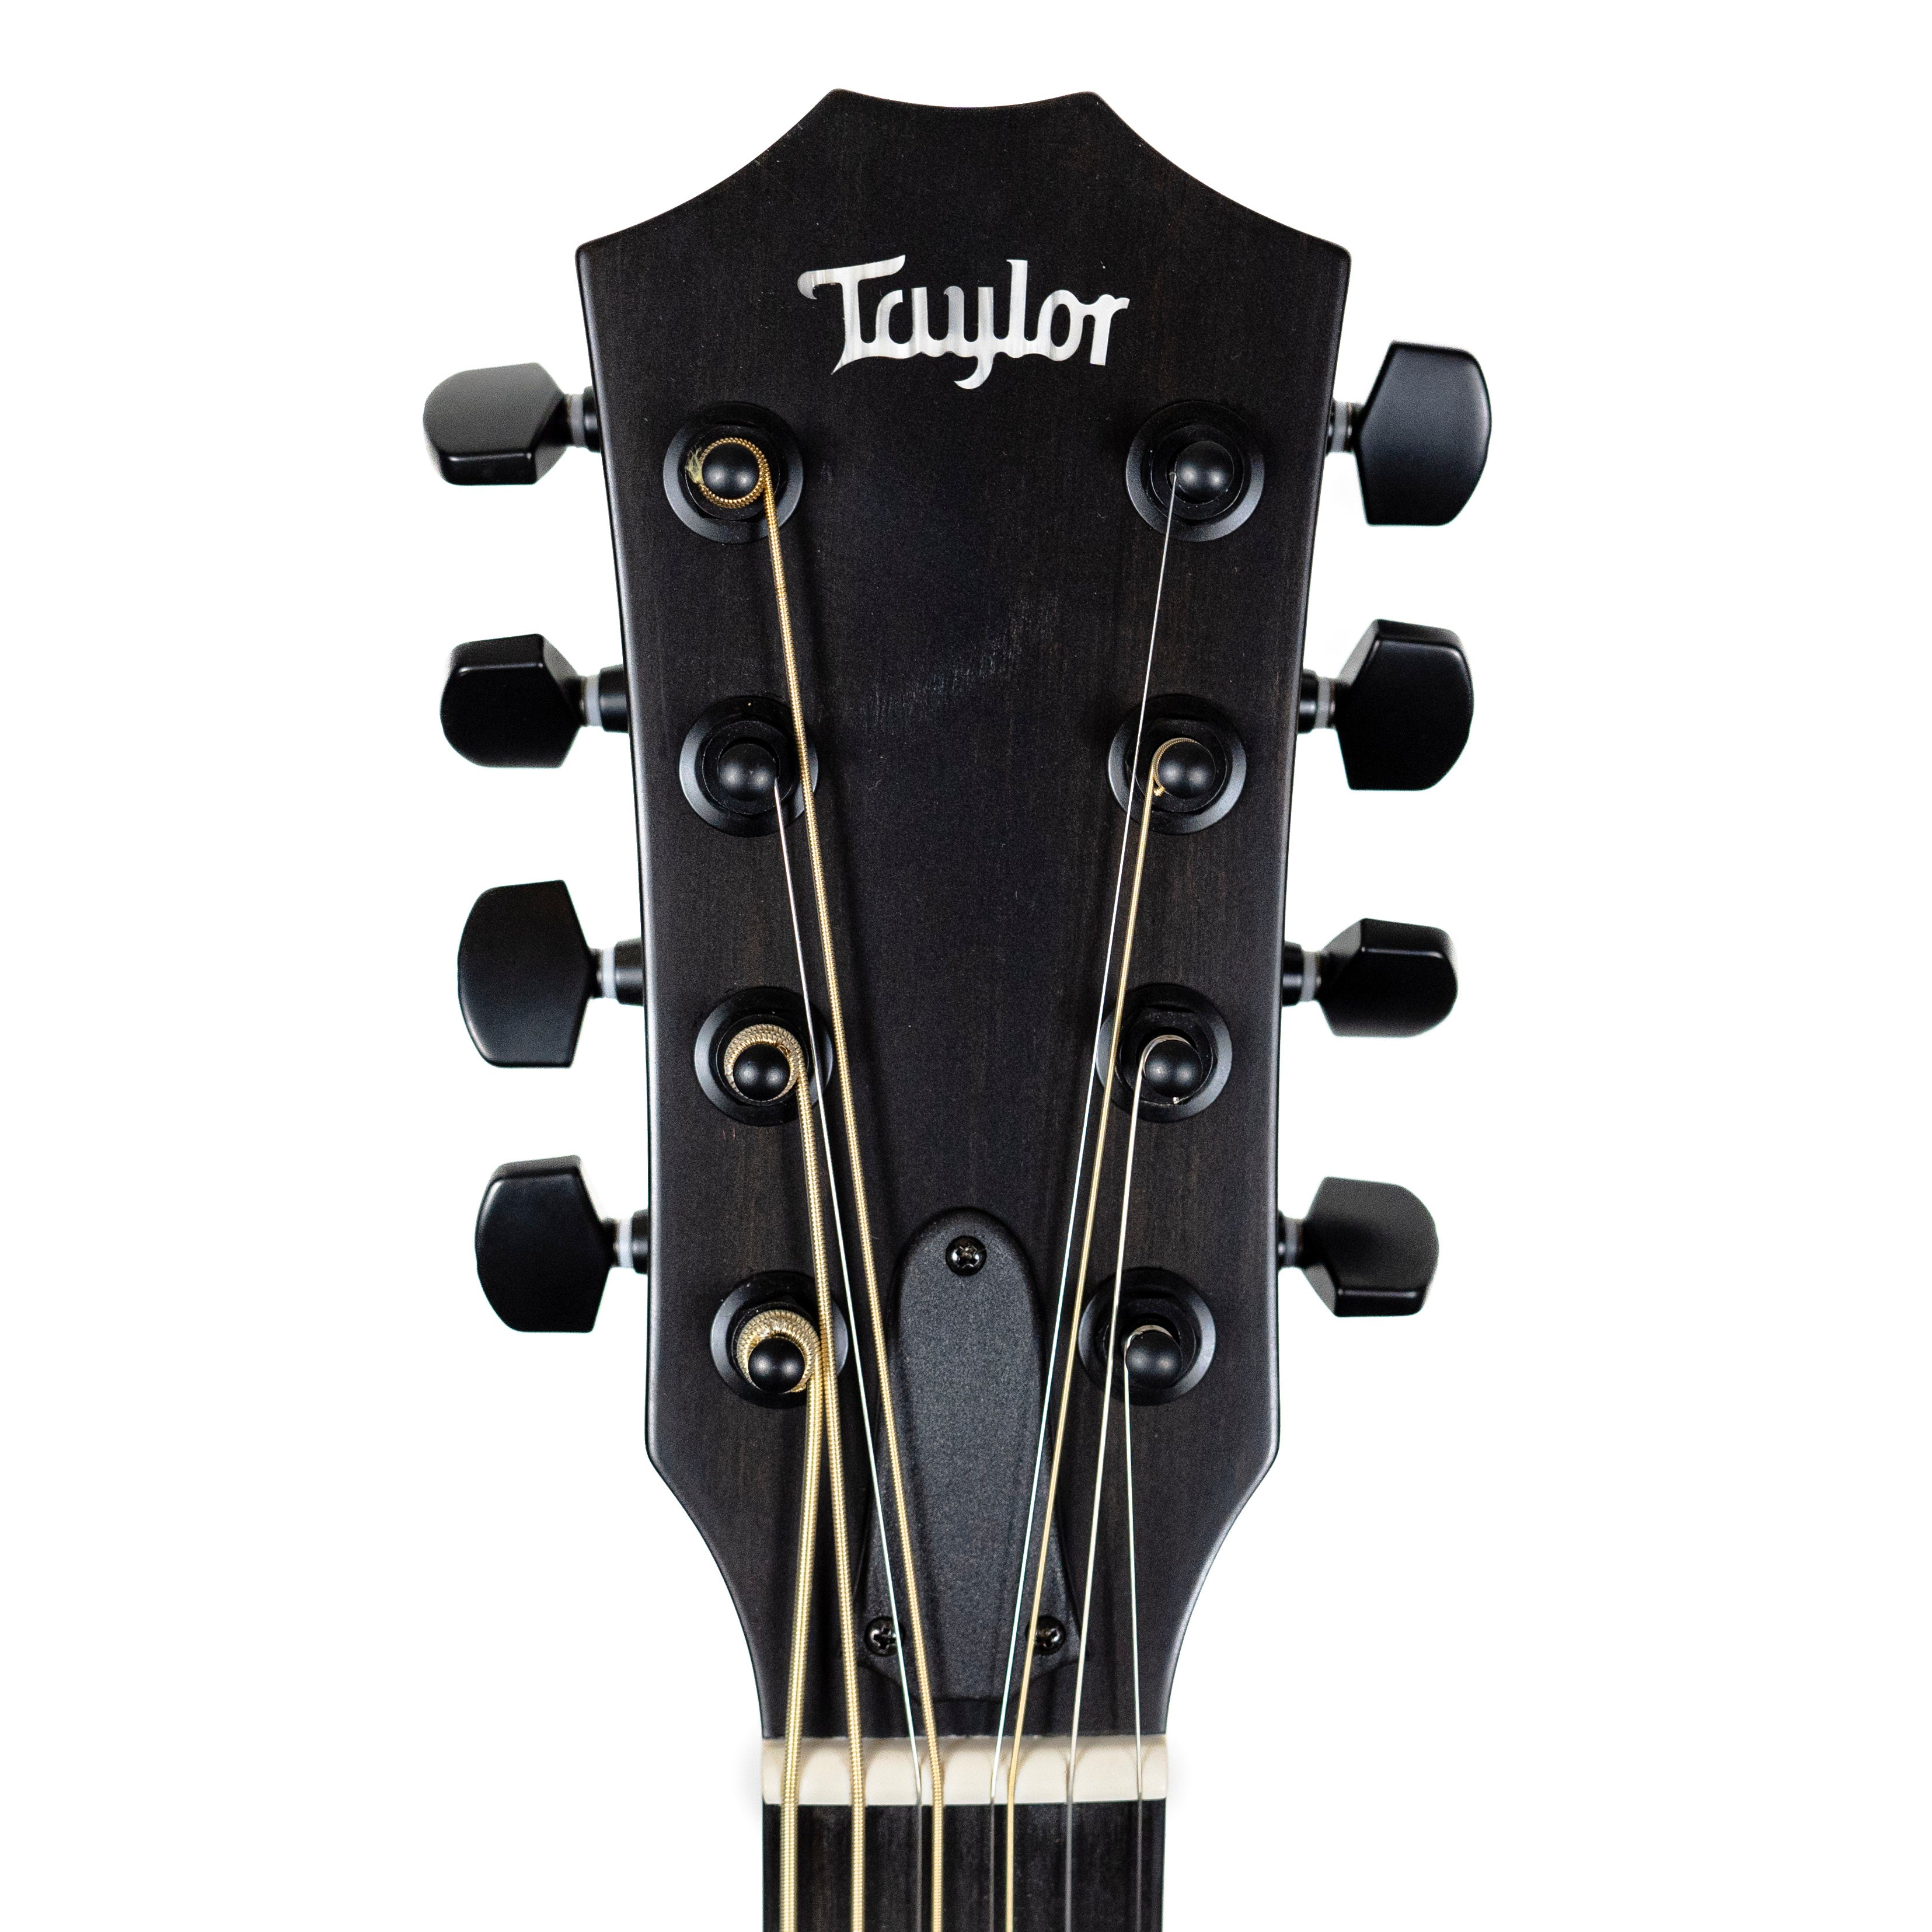 Taylor 326ce Baritone-8 Special Edition